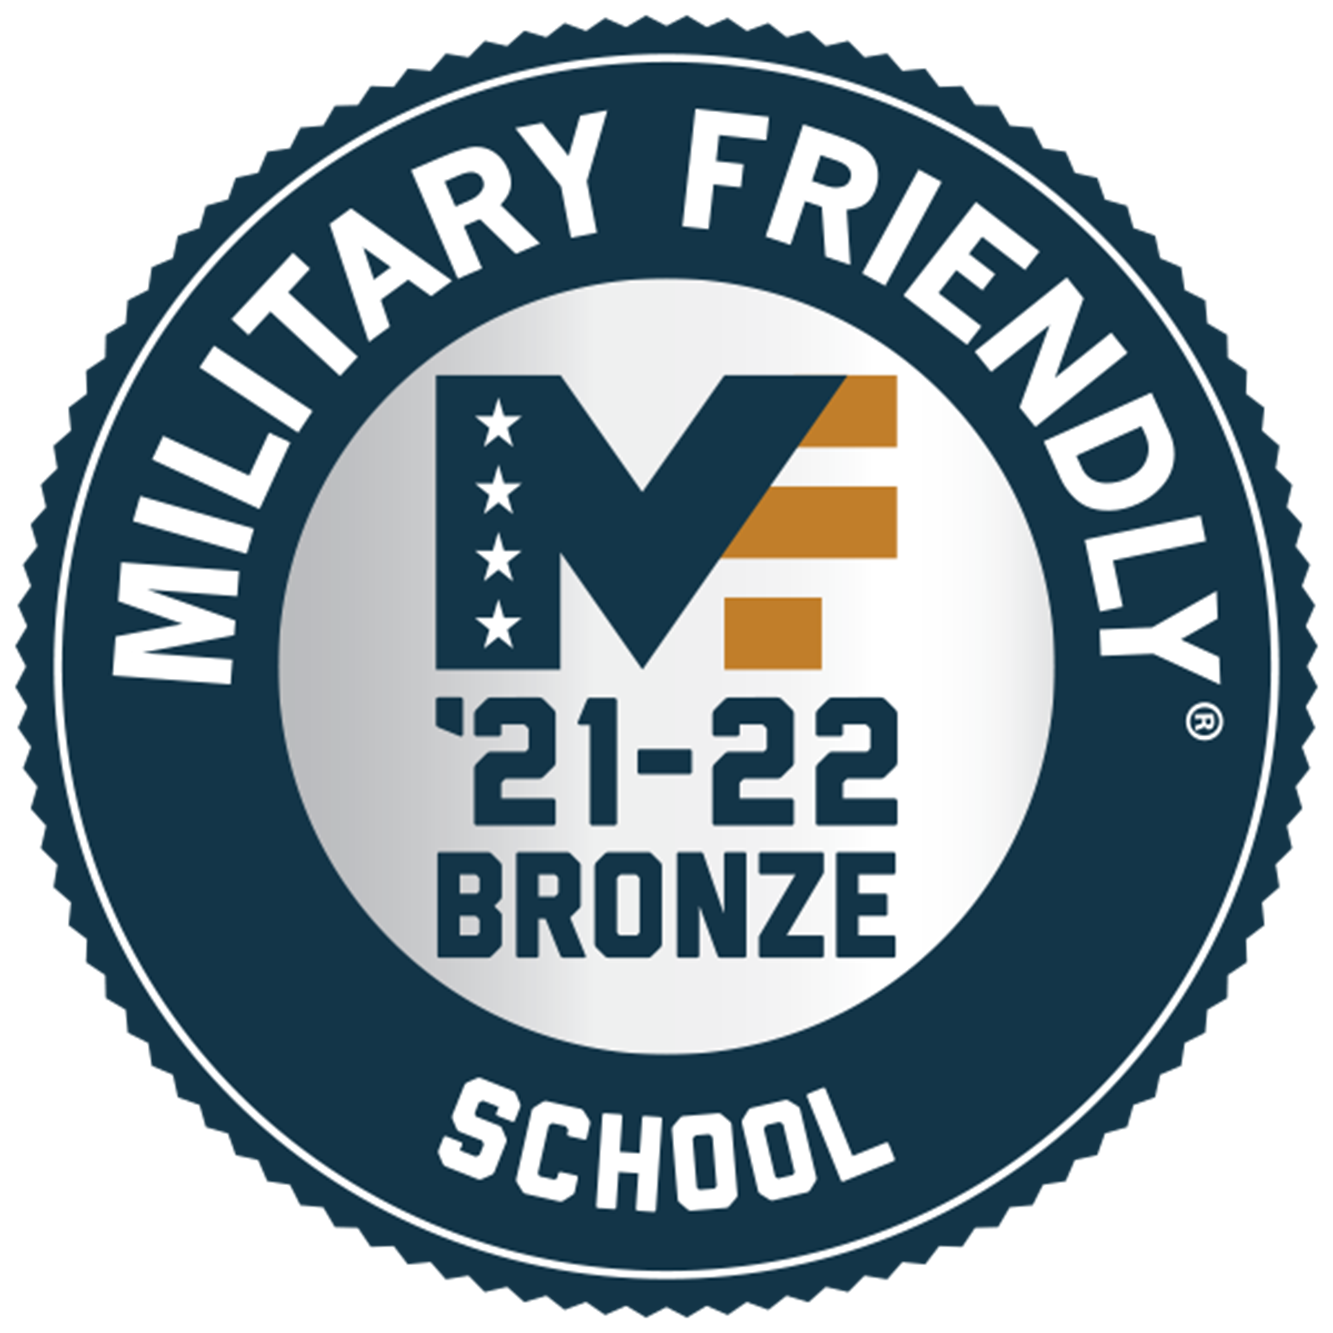 Military Friendly School Bronze logo.